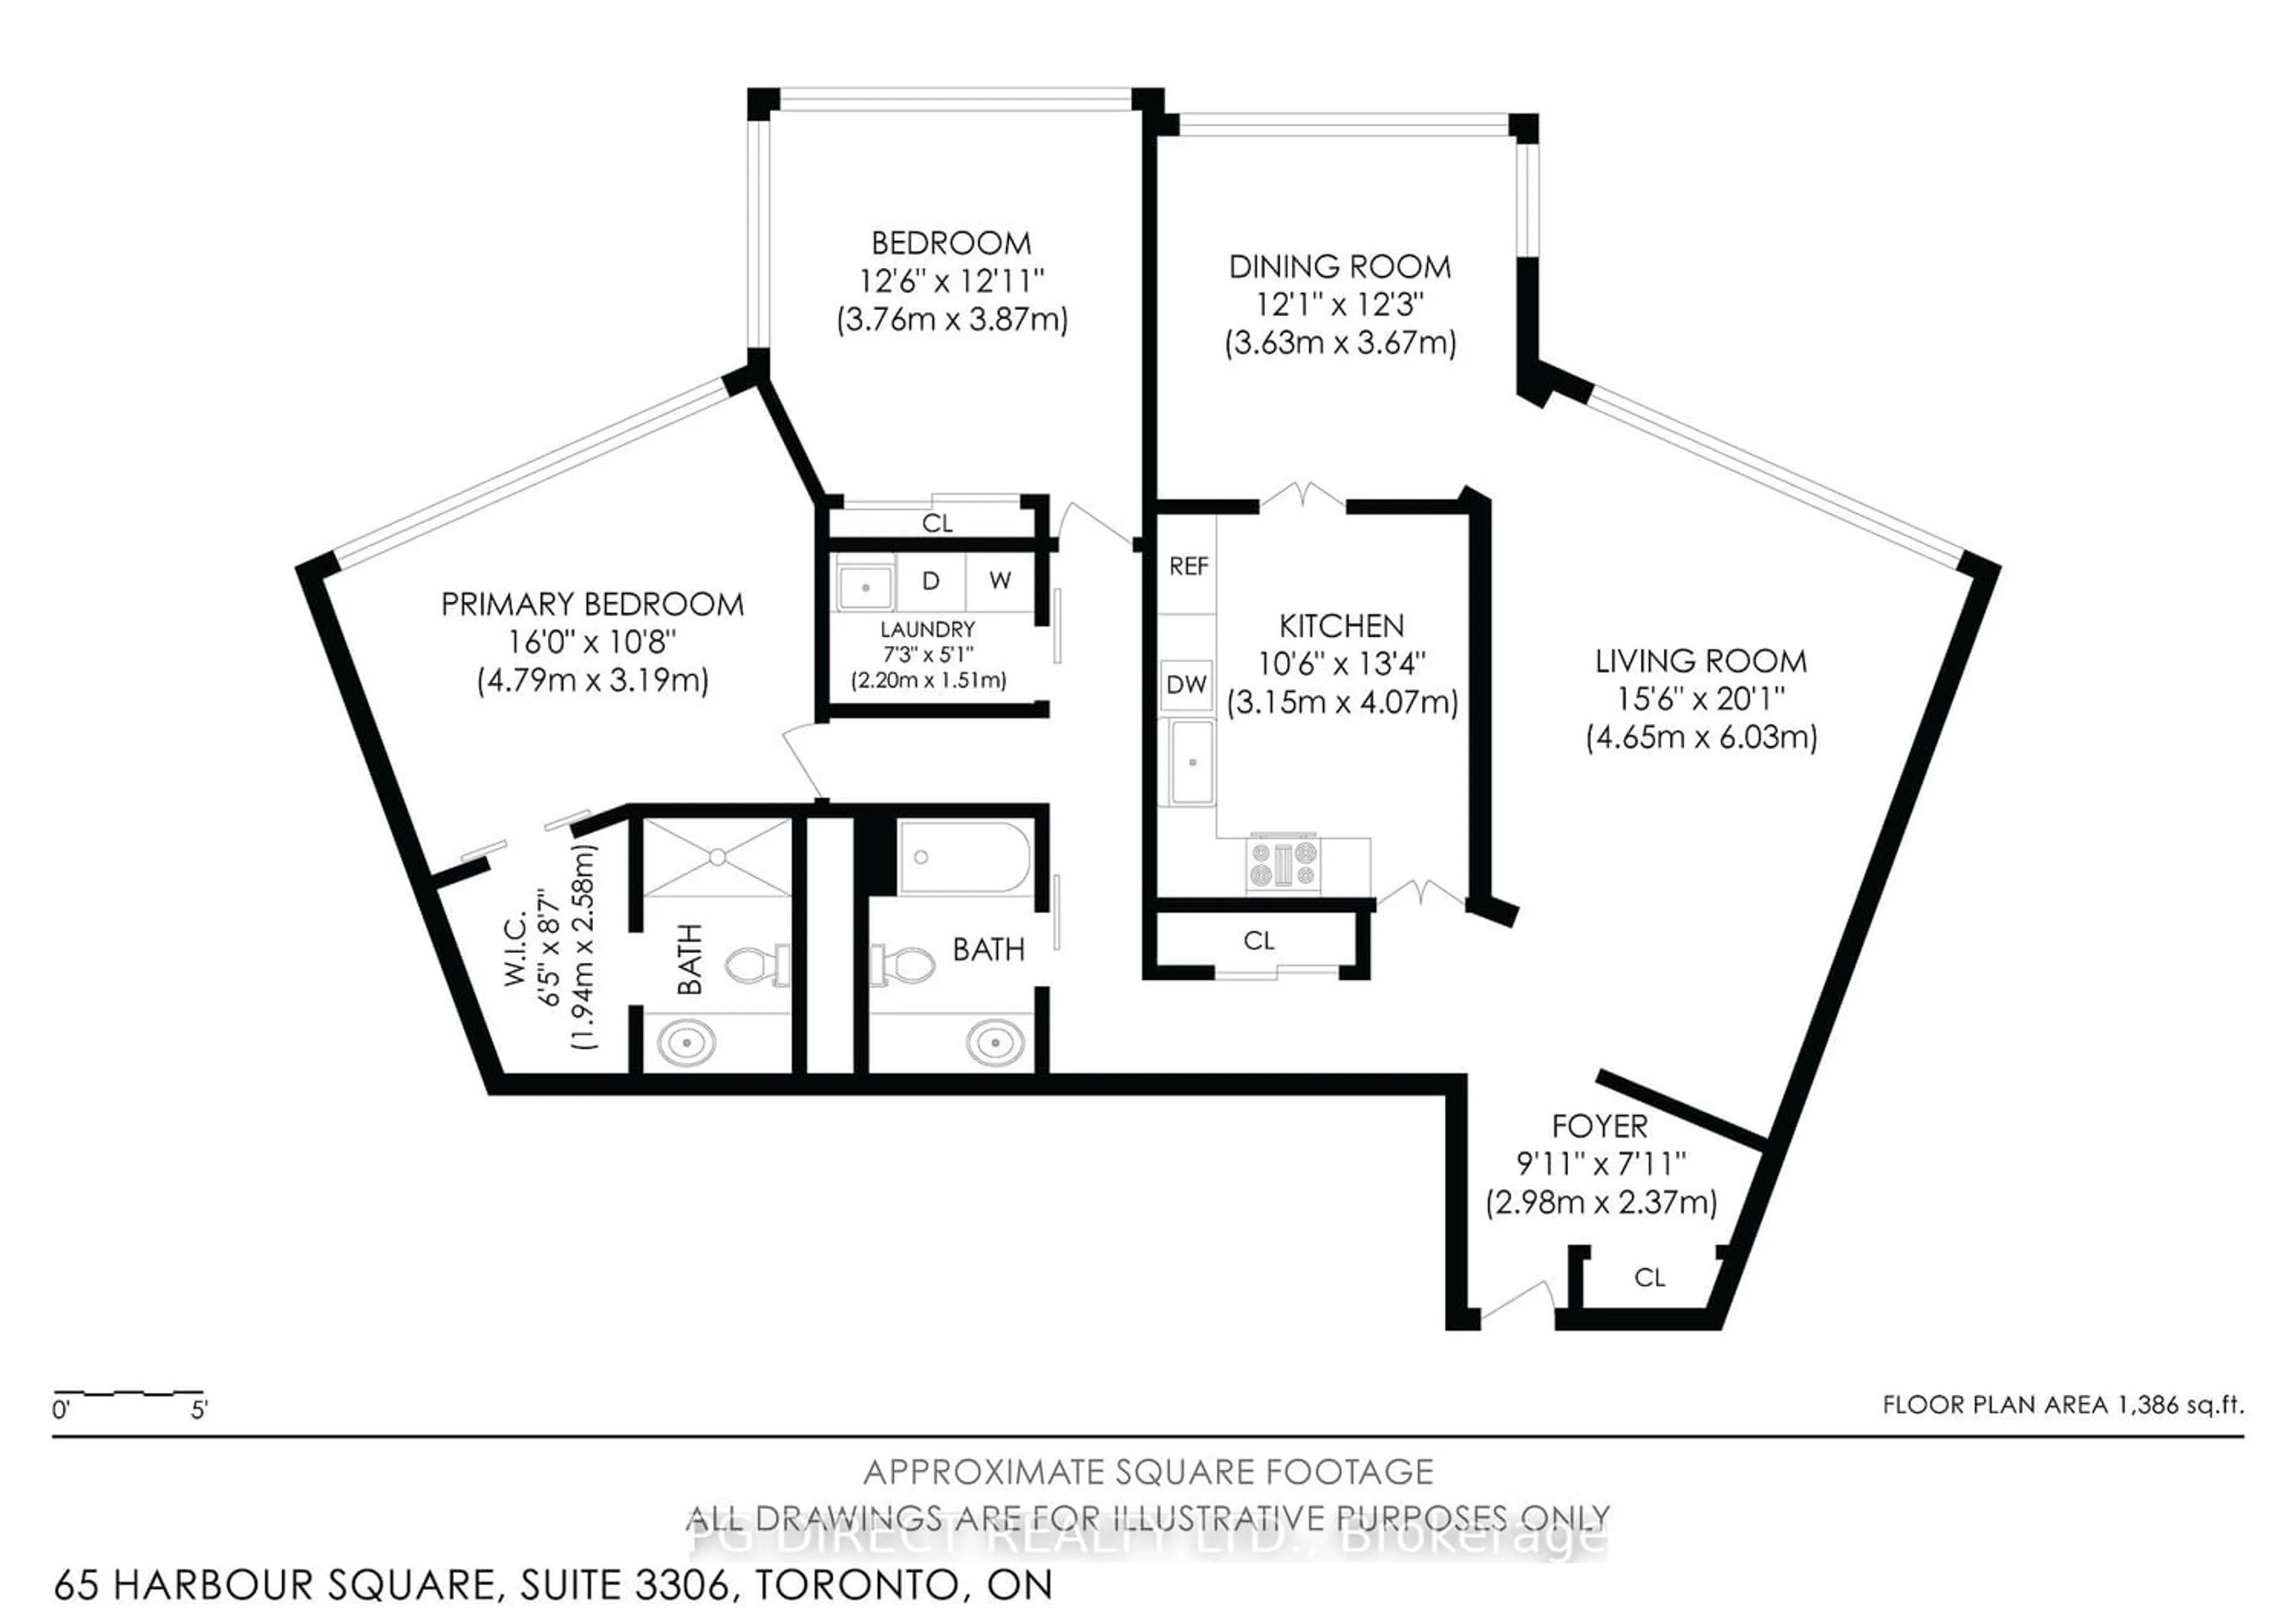 Floor plan for 65 Harbour Sq #3306, Toronto Ontario M5J 2L4